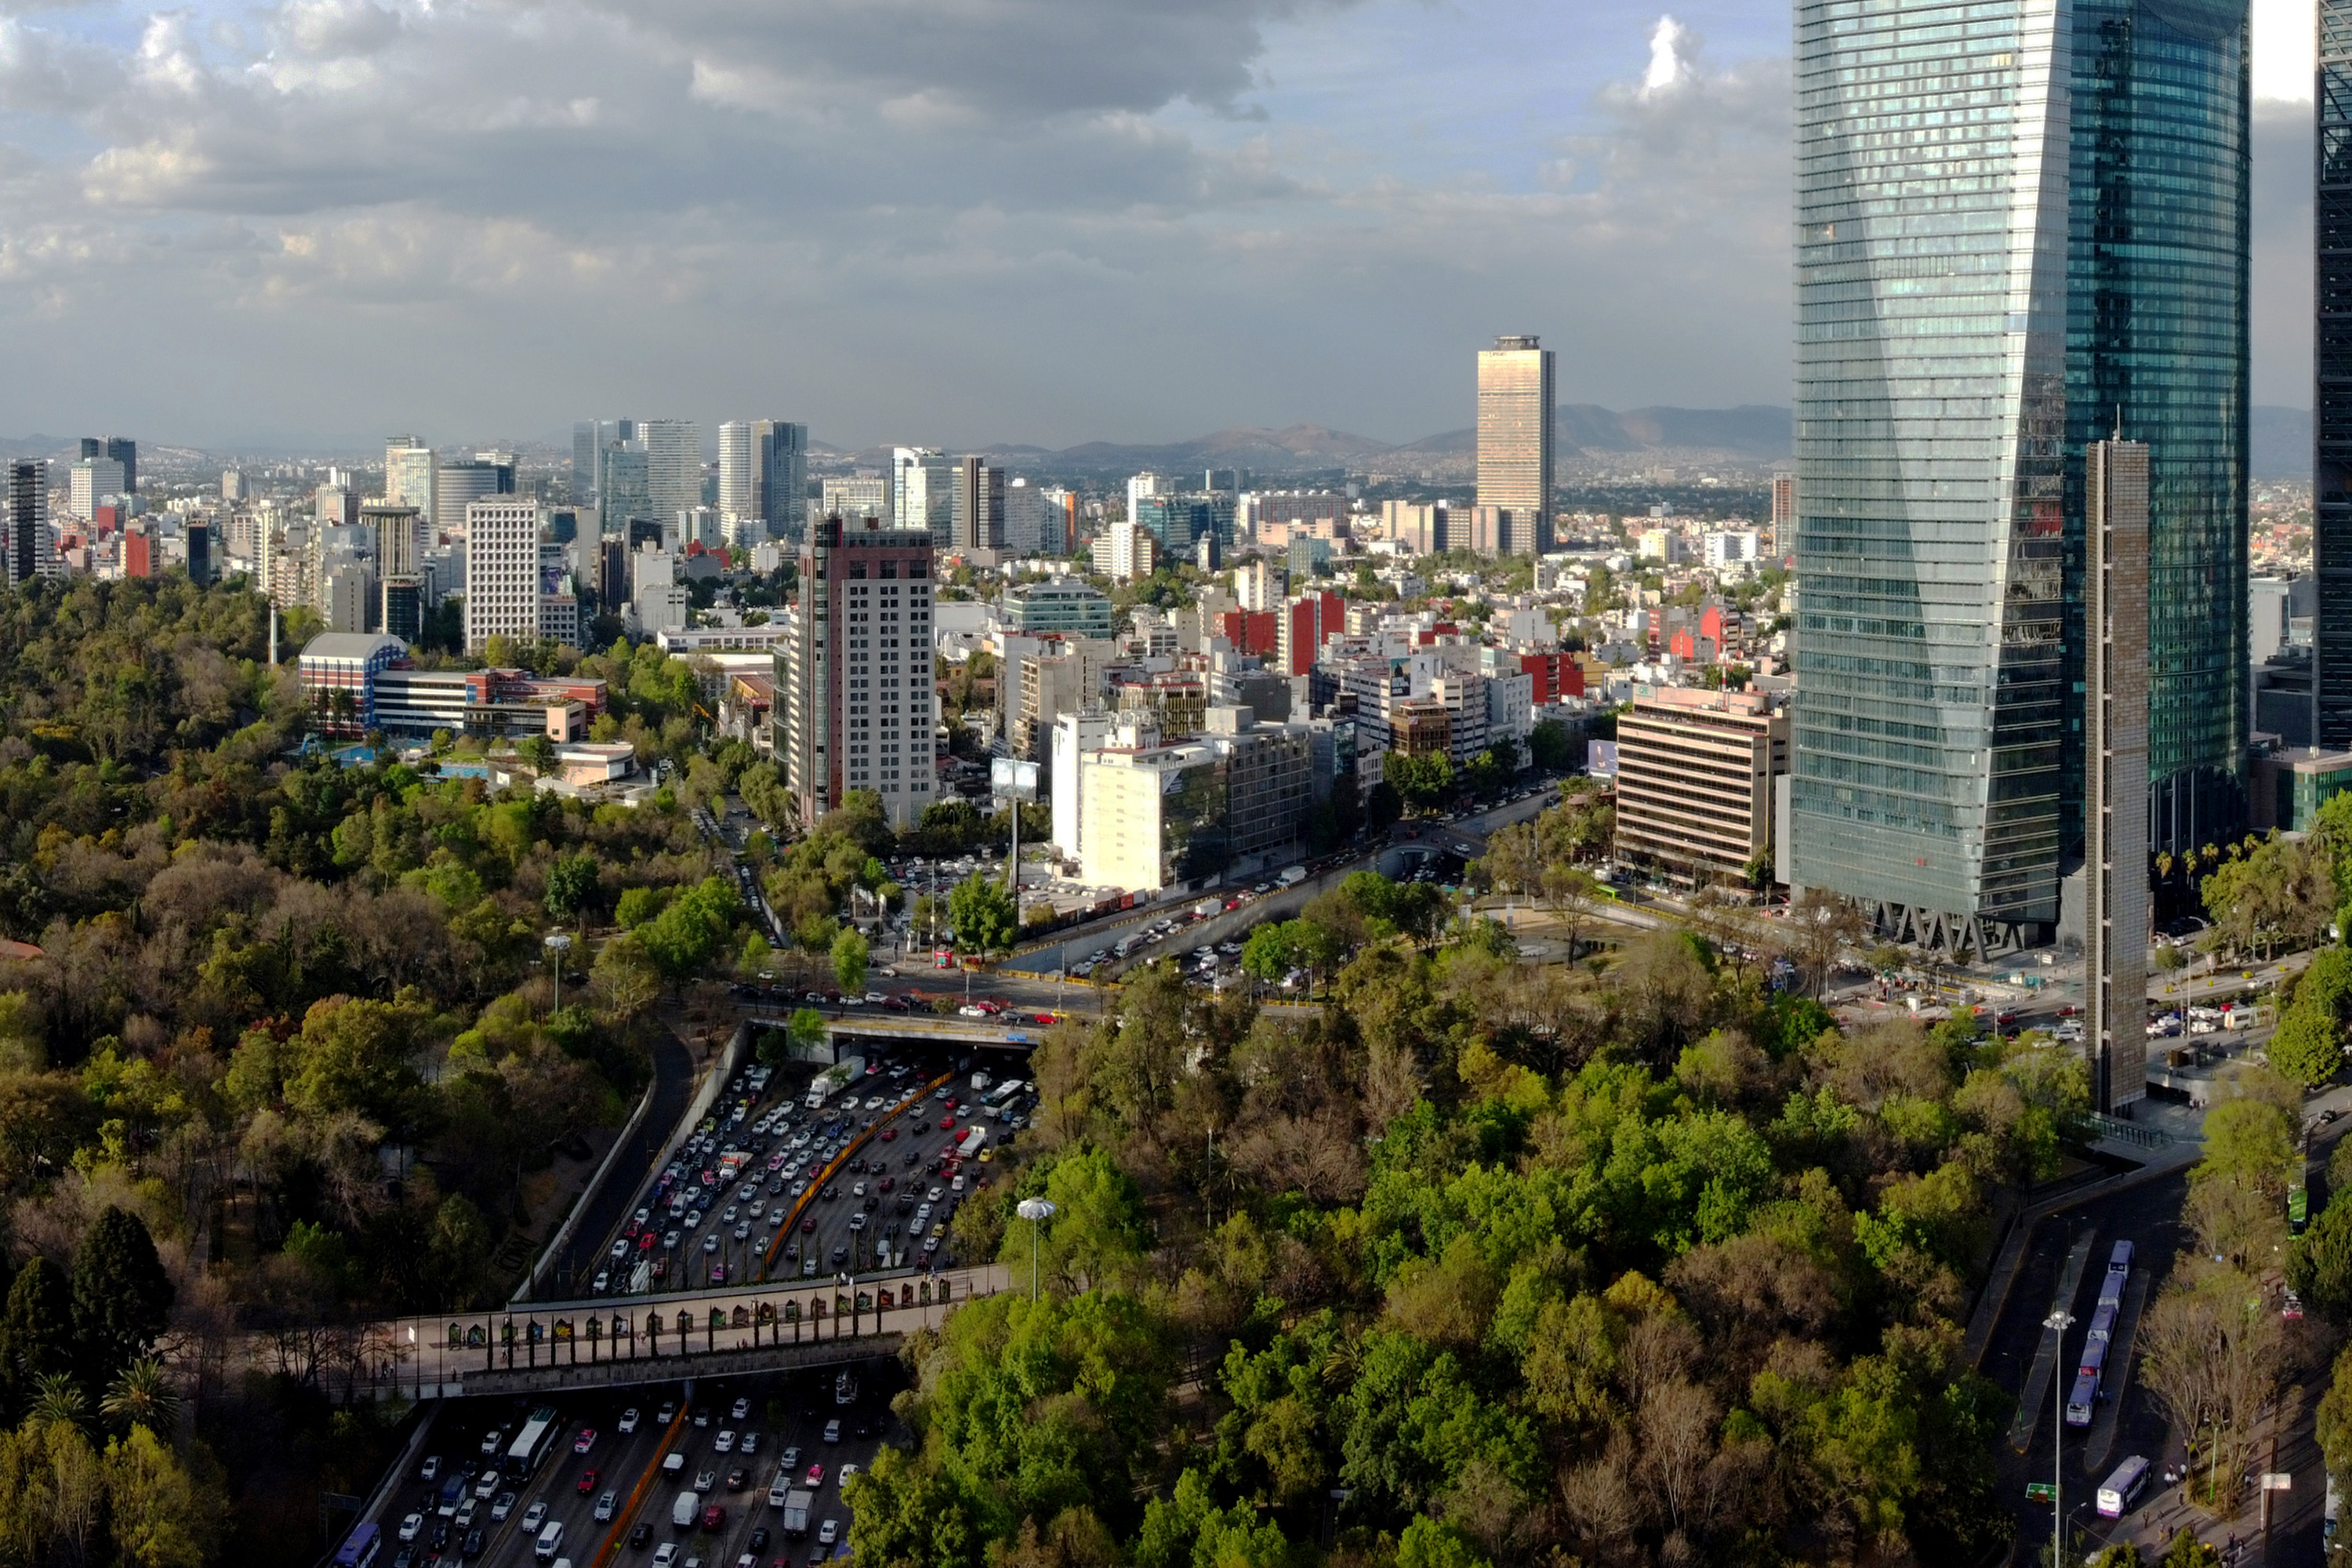 Skyline of Mexico City